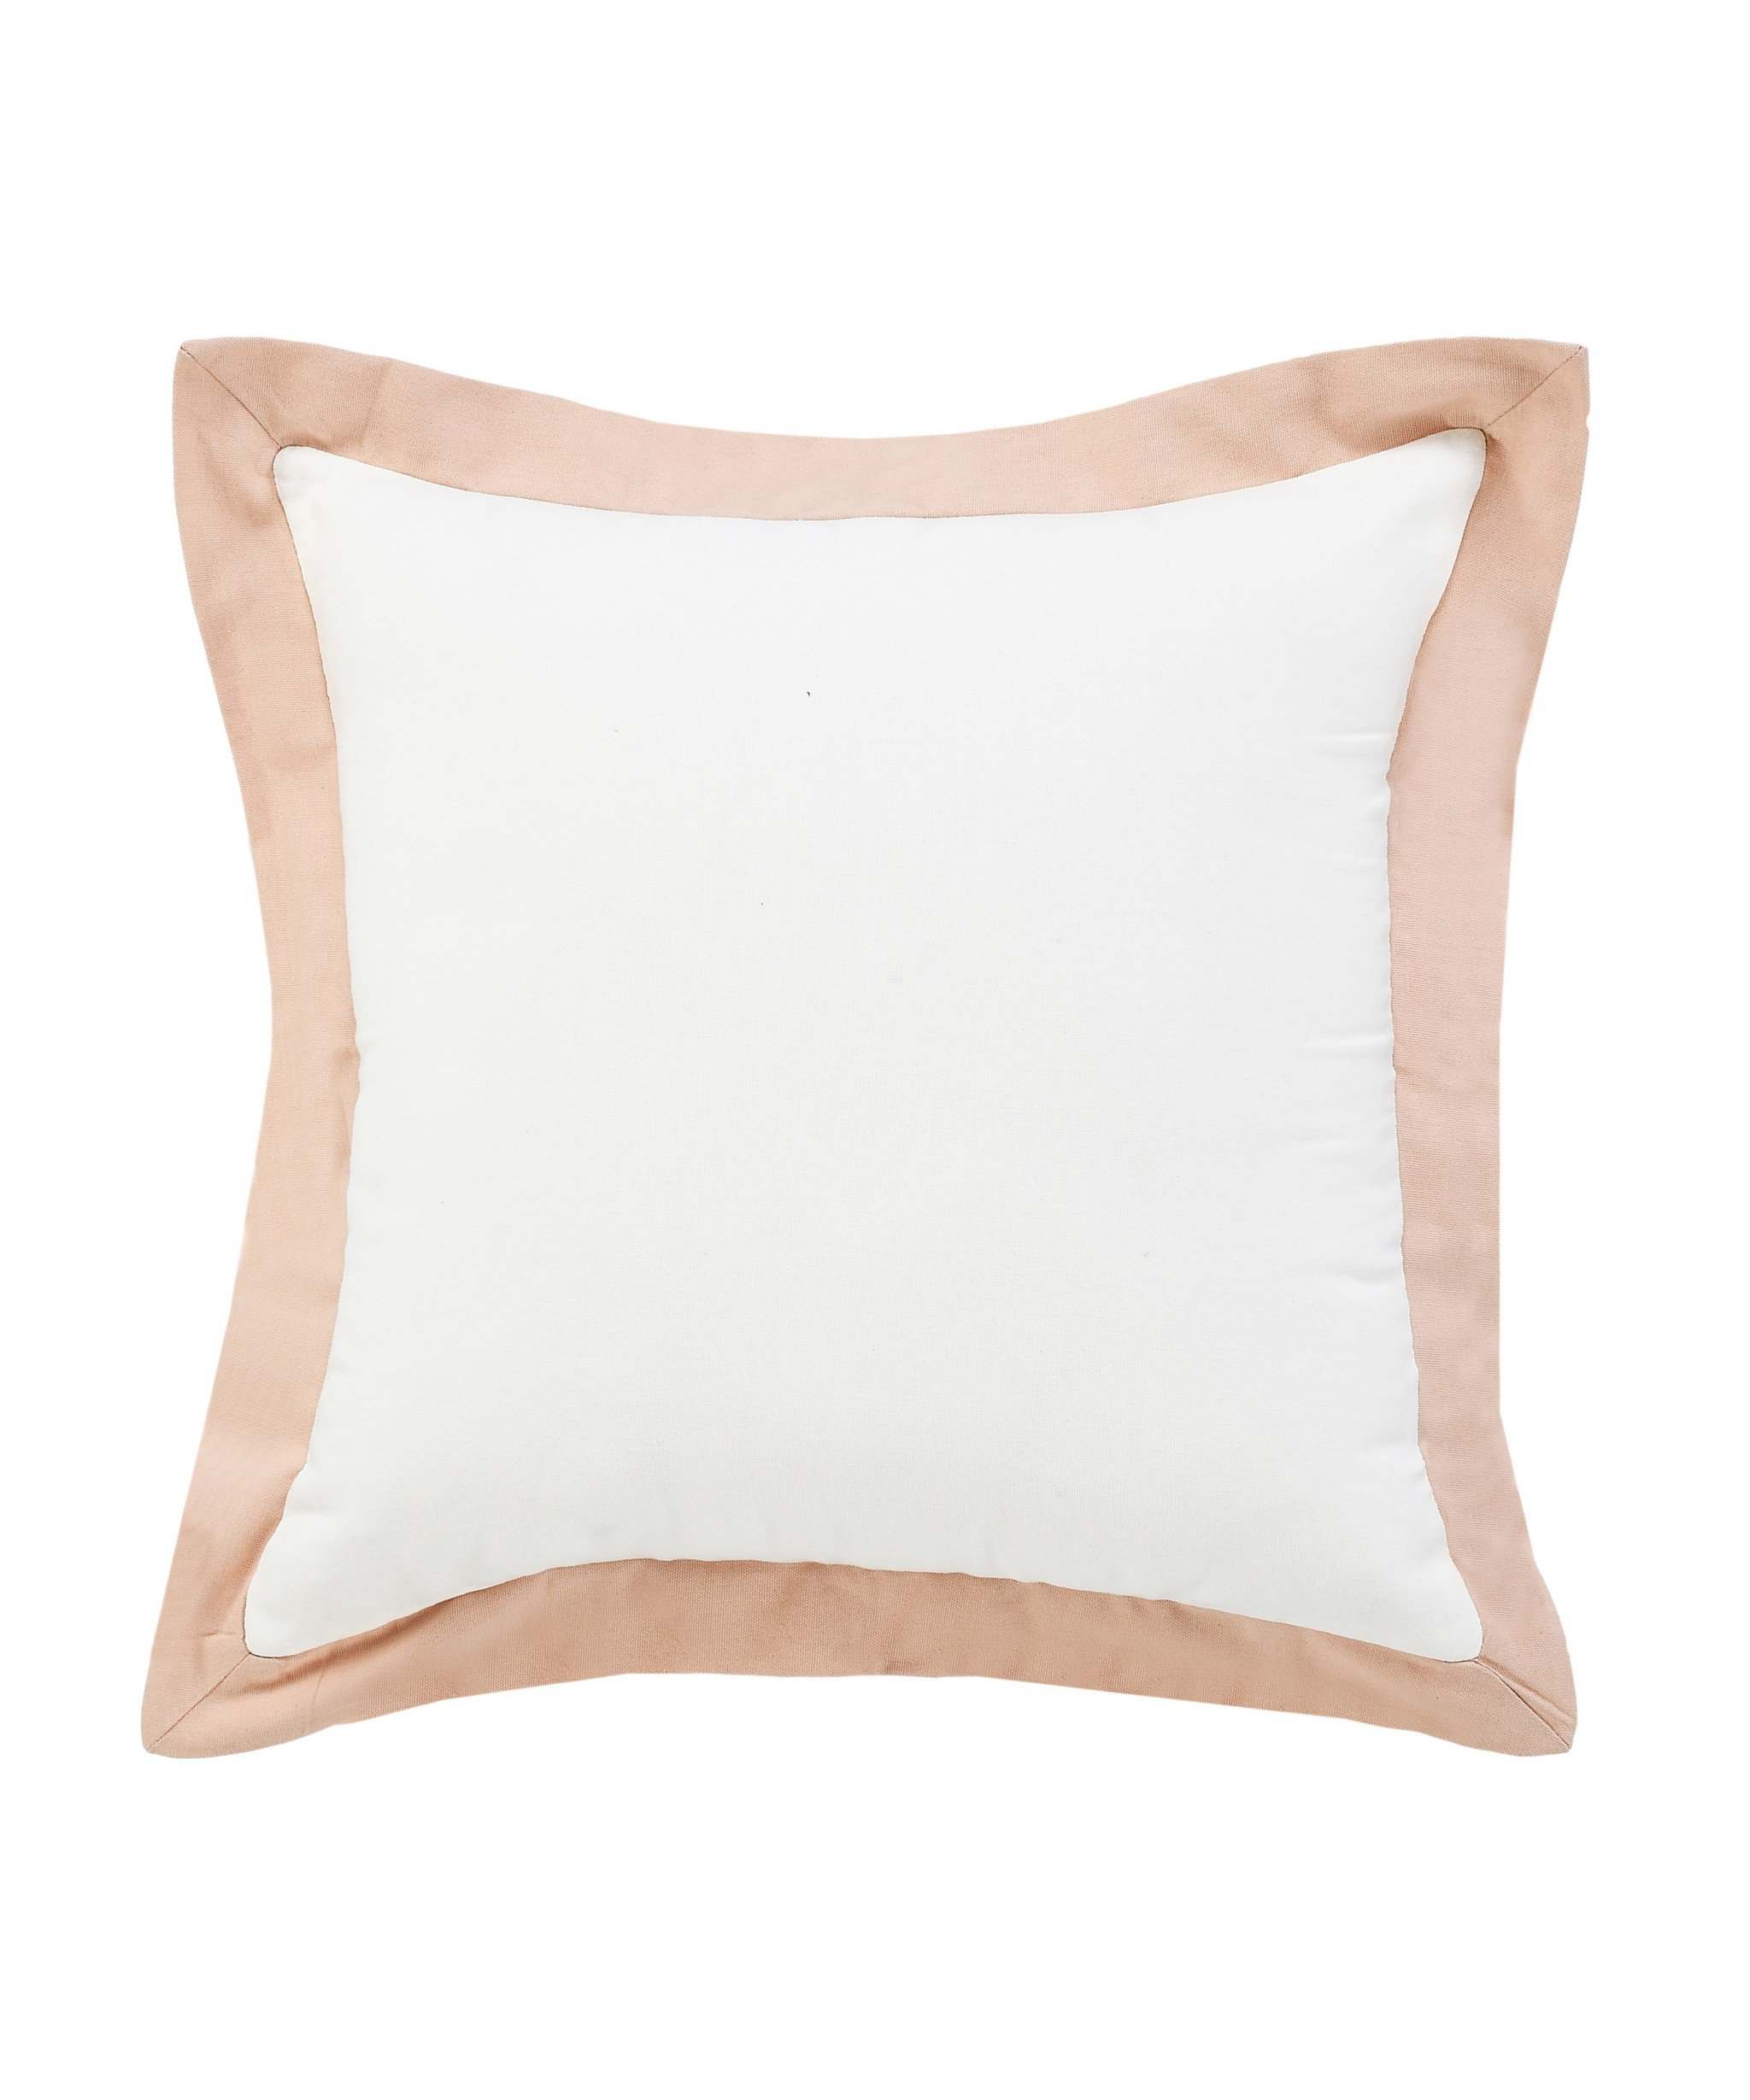 20" X 20" White And Light Pink 100% Cotton Geometric Zippered Pillow-516825-1